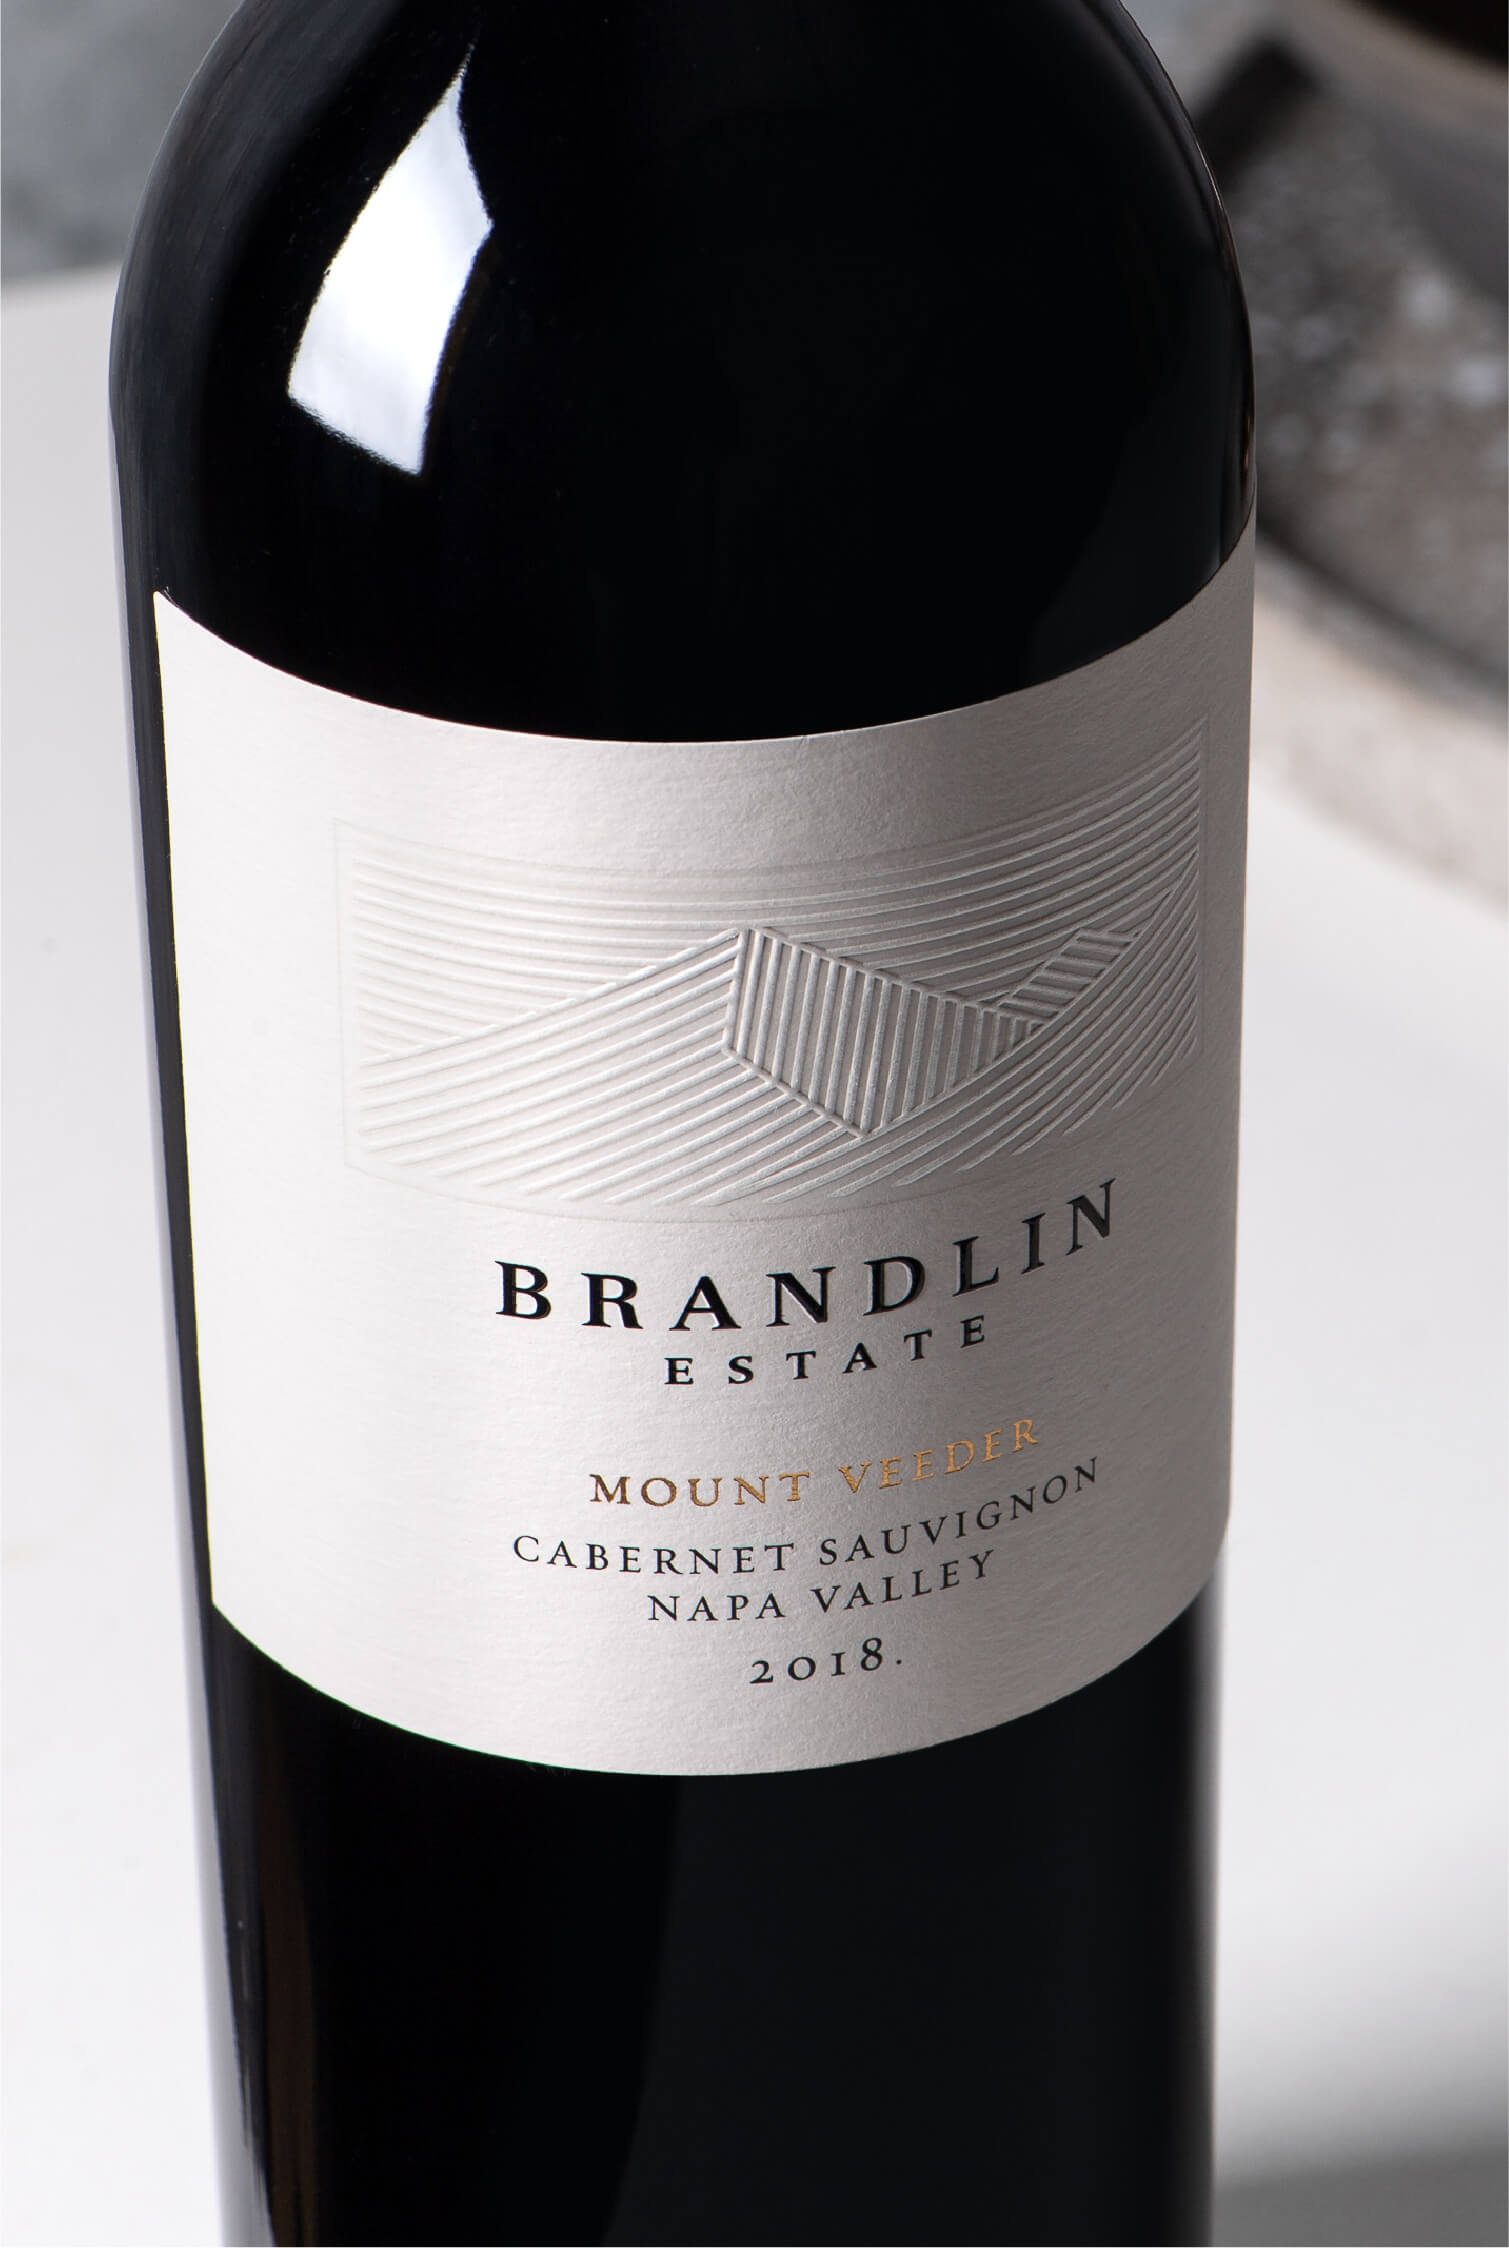 MUSE Design Winners - Brandlin Estate Wine Packaging Redesign